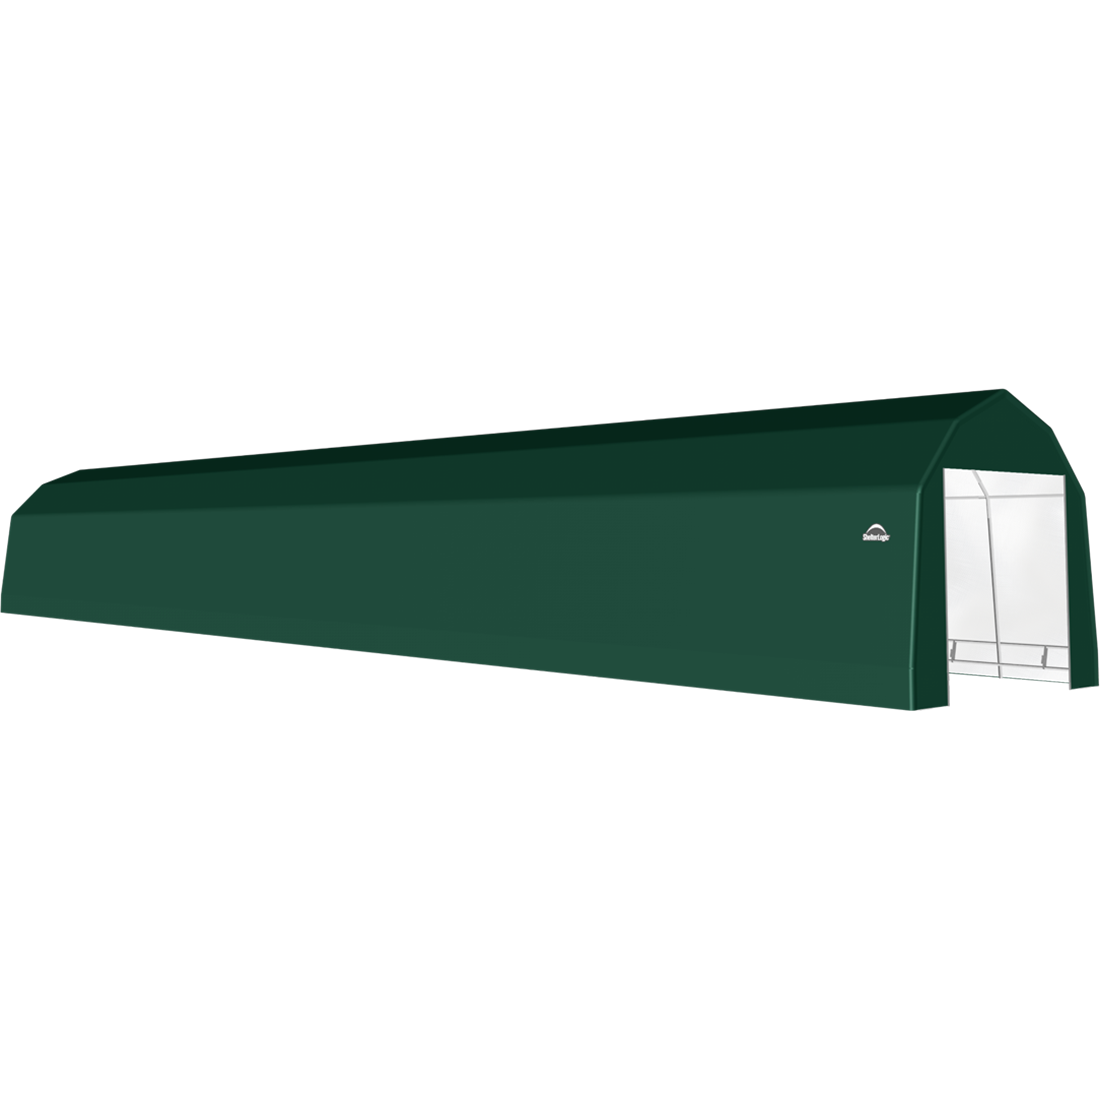 ShelterTech SP Series Barn Shelter, 12 ft. x 80 ft. x 11 ft. Heavy Duty PVC 14.5 oz. Green